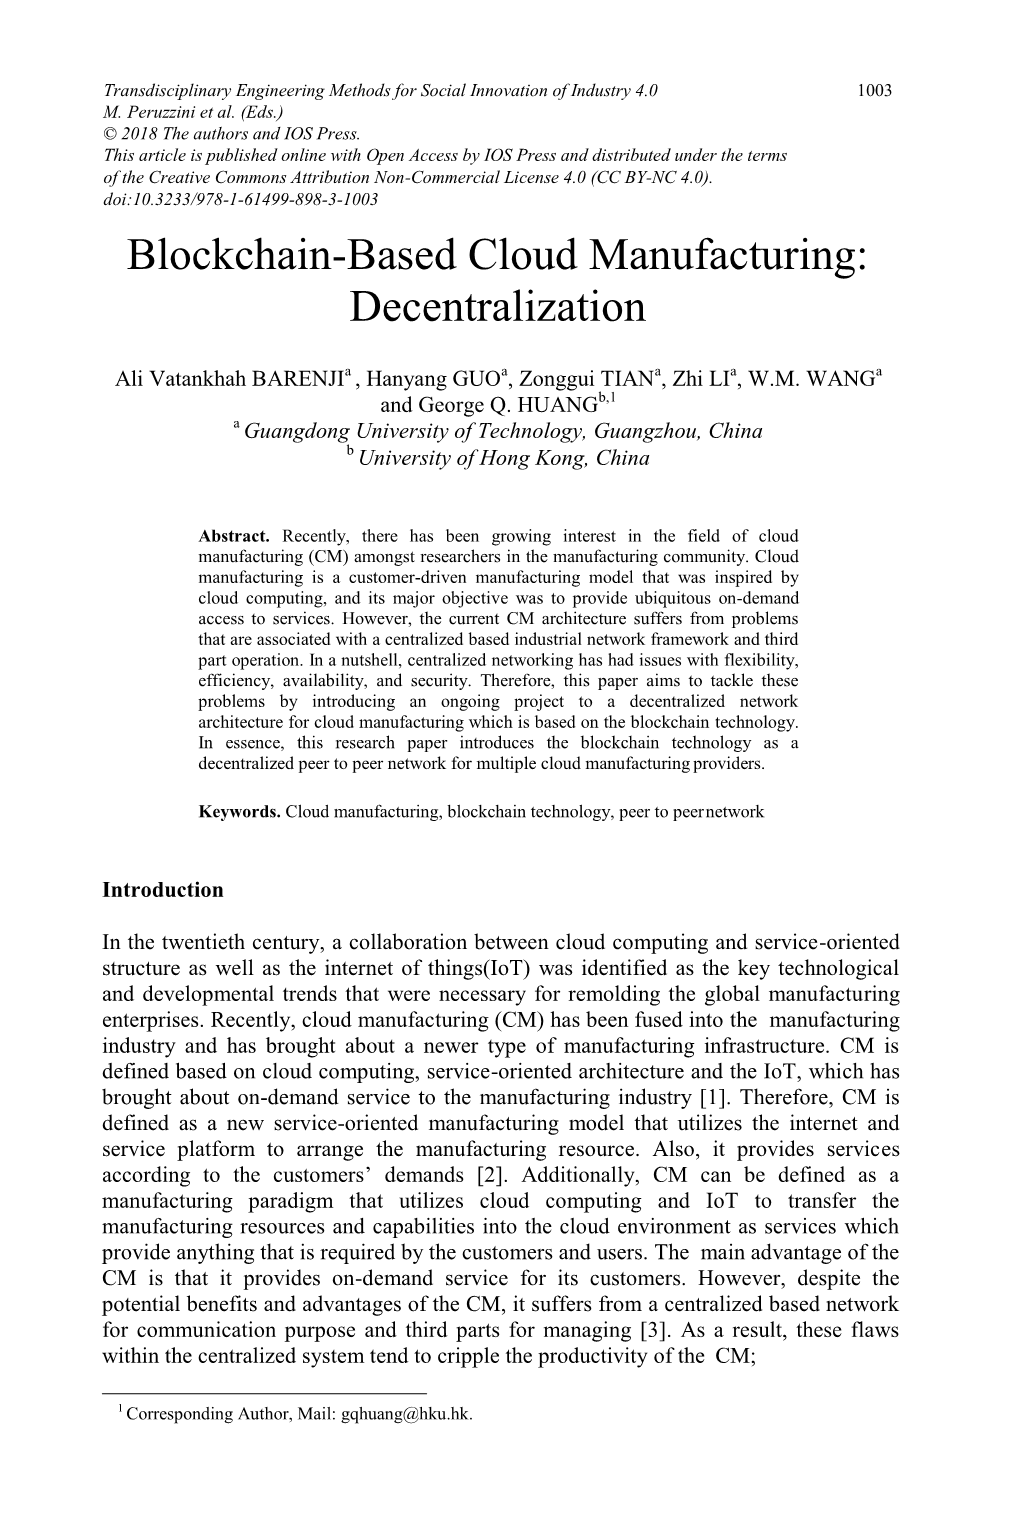 Blockchain-Based Cloud Manufacturing: Decentralization